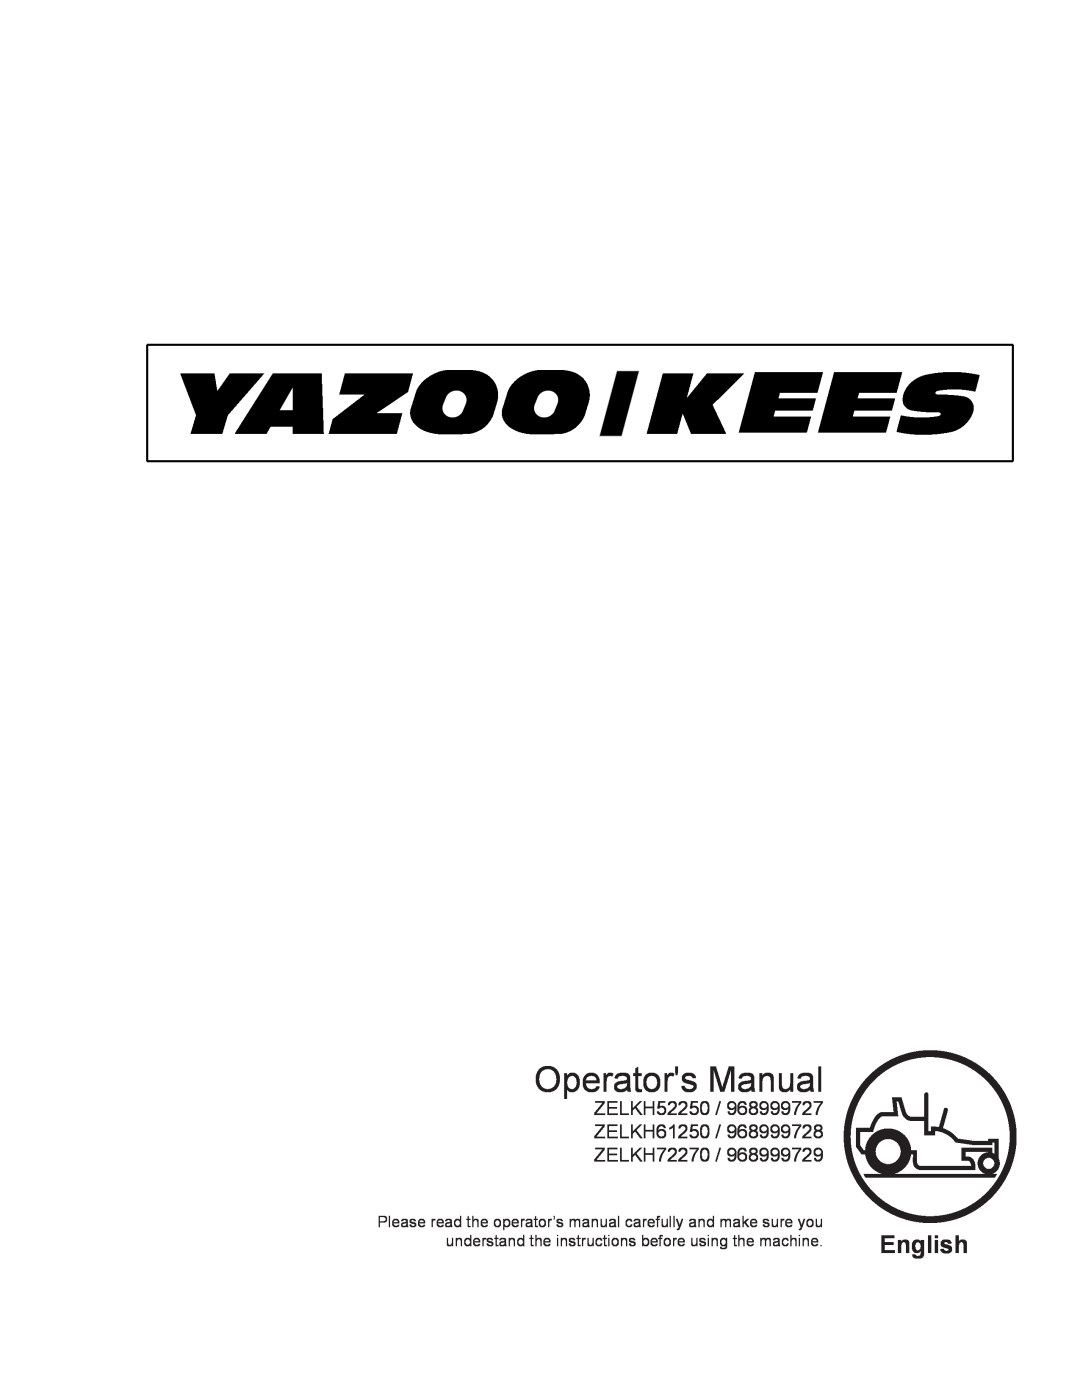 Yazoo/Kees manual English, Operators Manual, ZELKH52250 / 968999727 ZELKH61250 / 968999728 ZELKH72270 